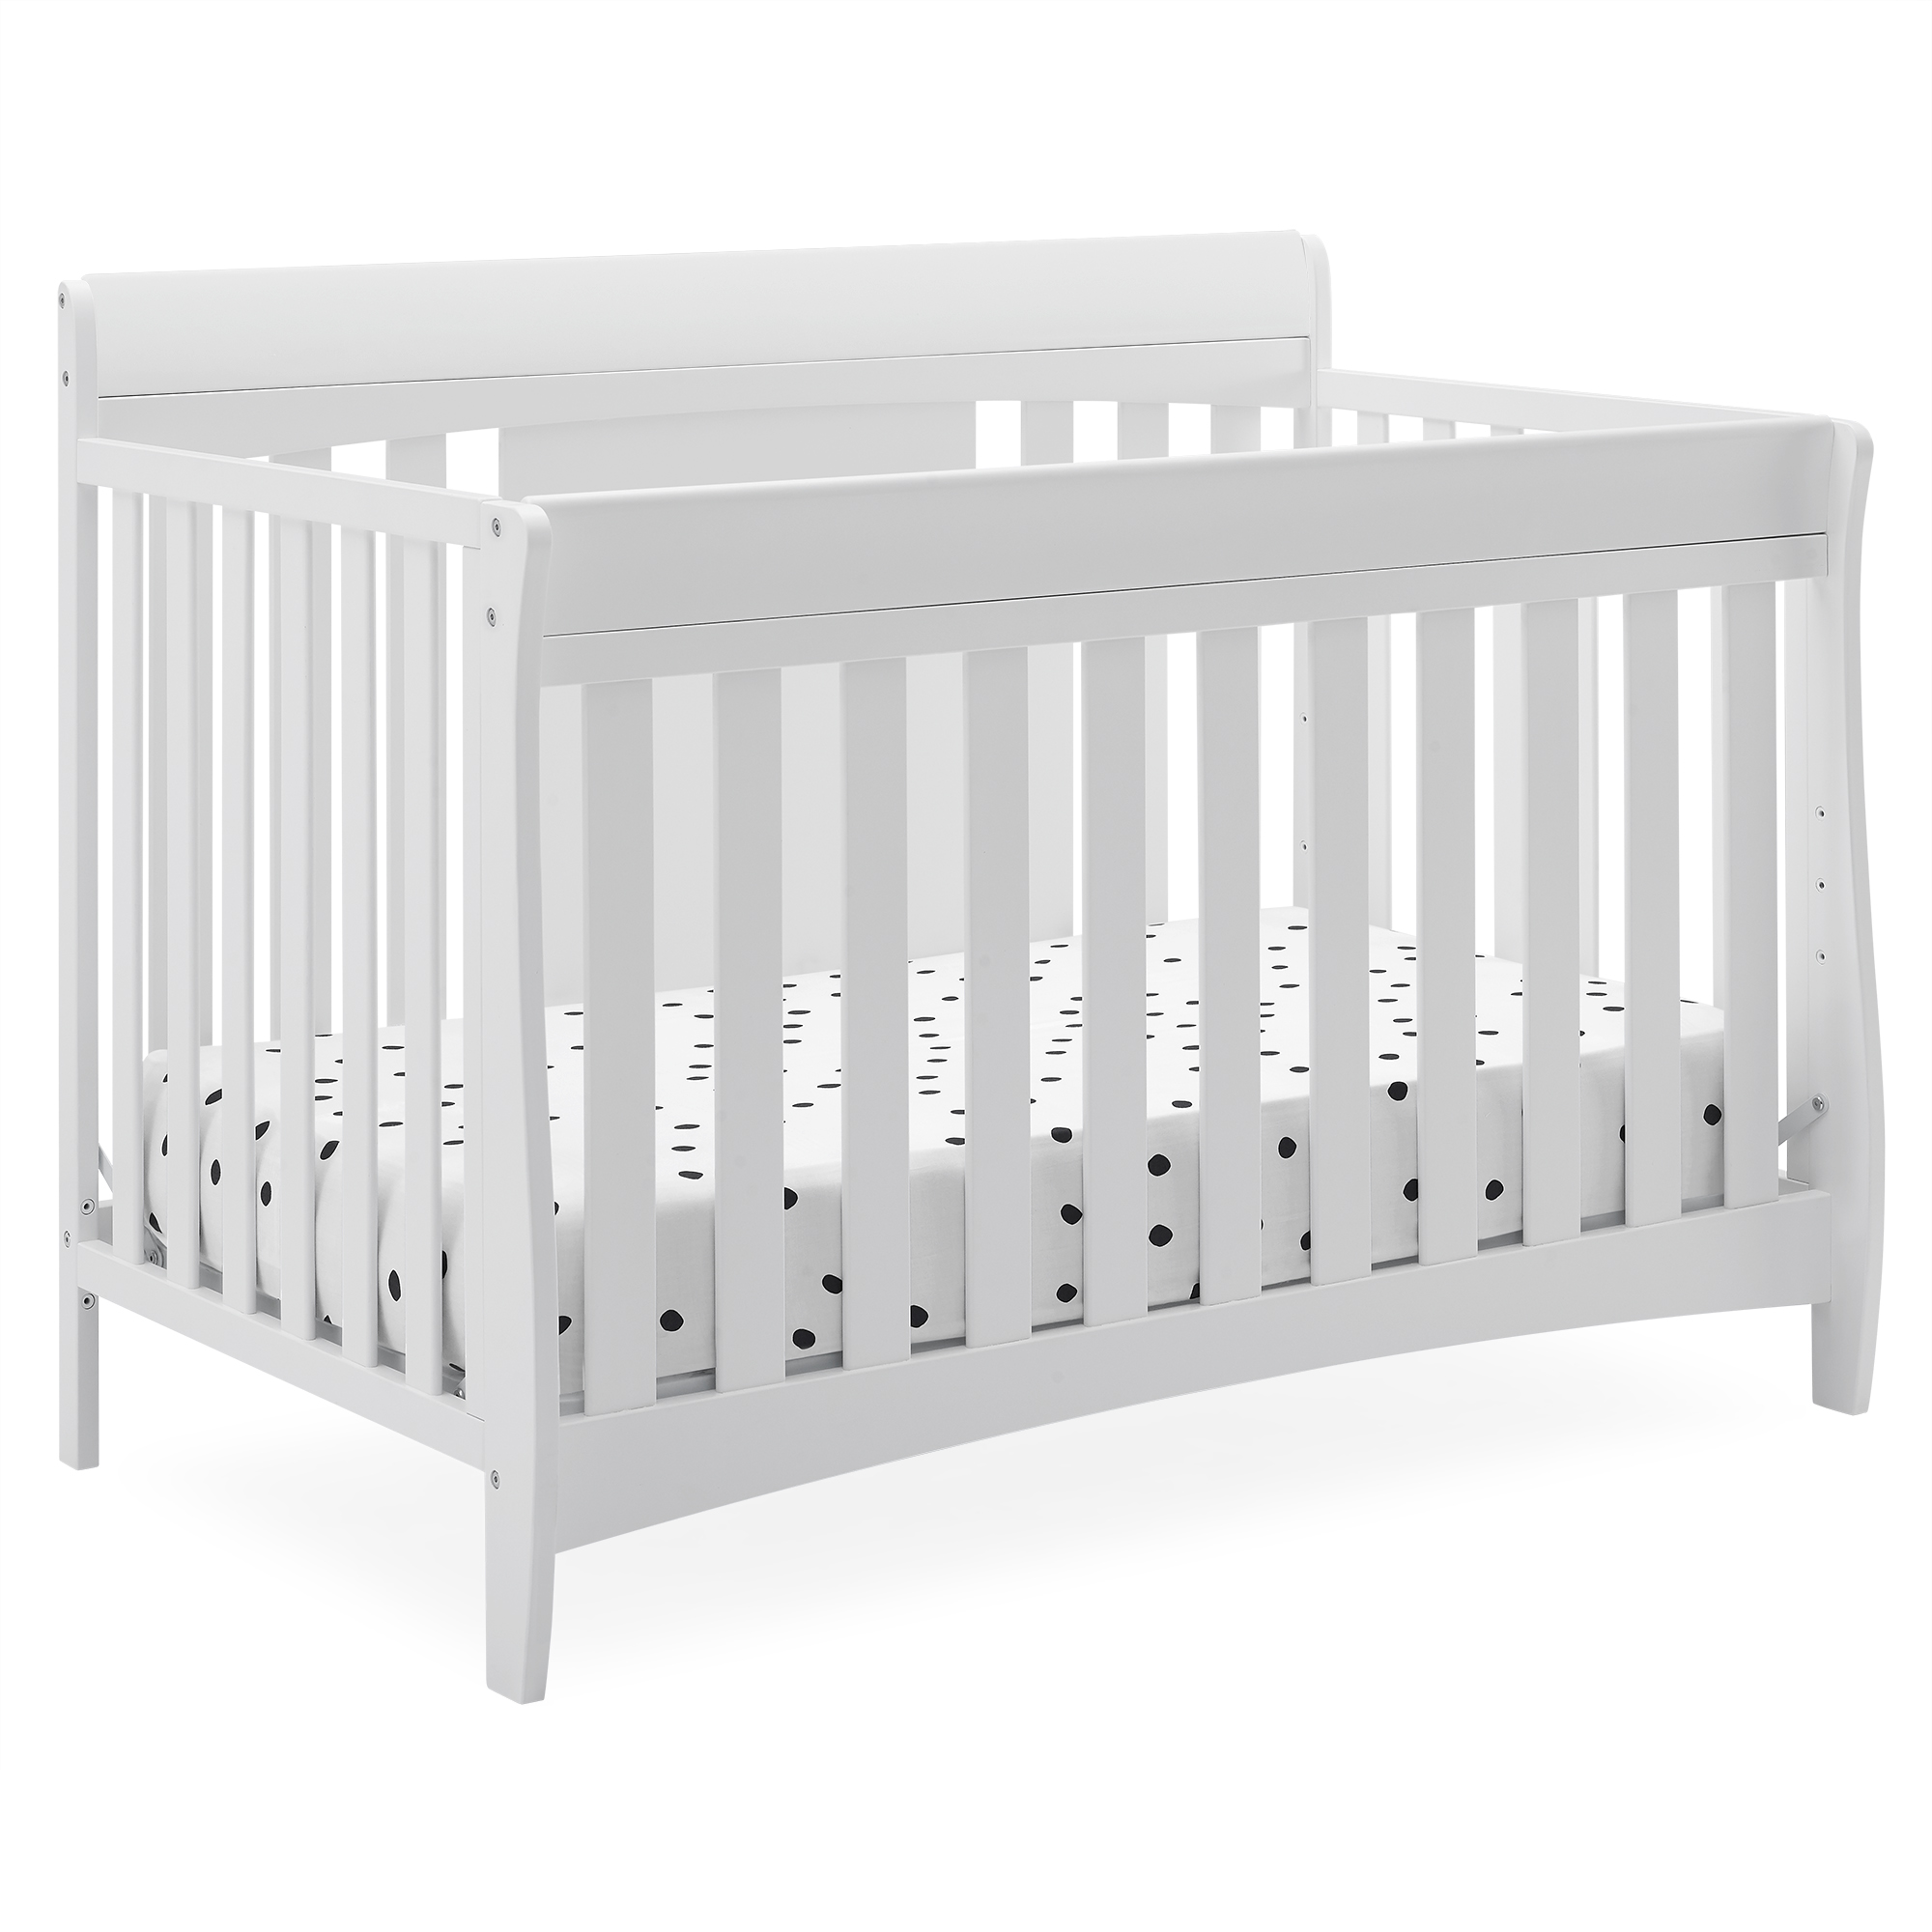 Delta Children Richmond 6-in-1 Convertible Baby Crib, Bianca White - image 1 of 17